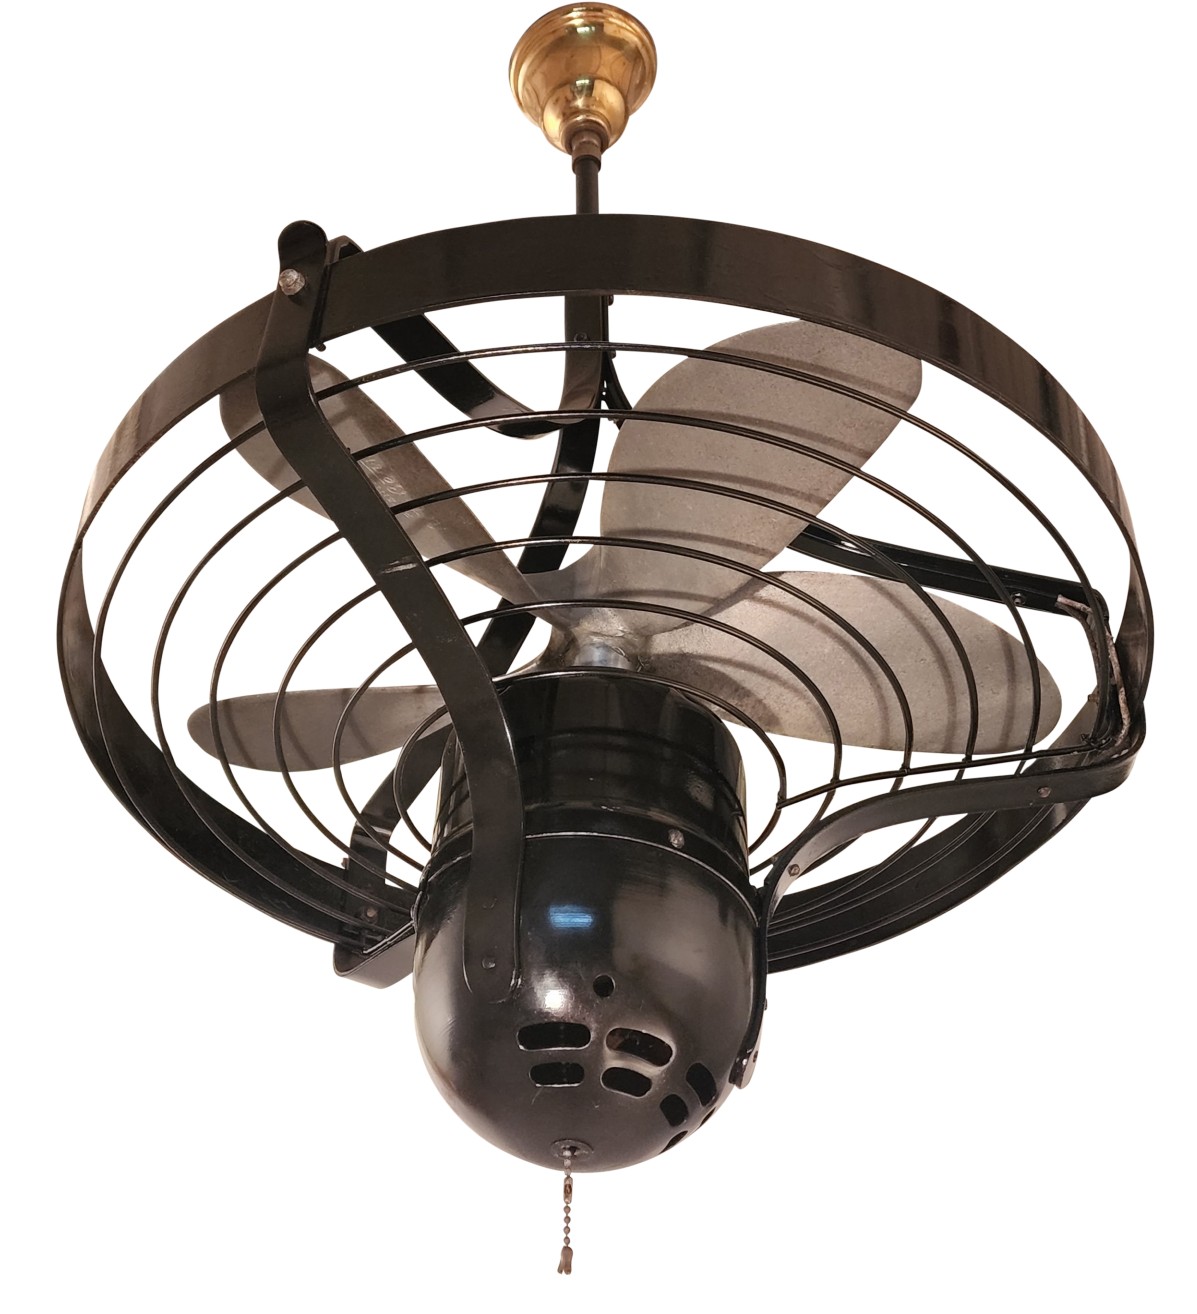 Circa 1949 Reynolds Radi-Aire Art Deco Modernist Ceiling Fan